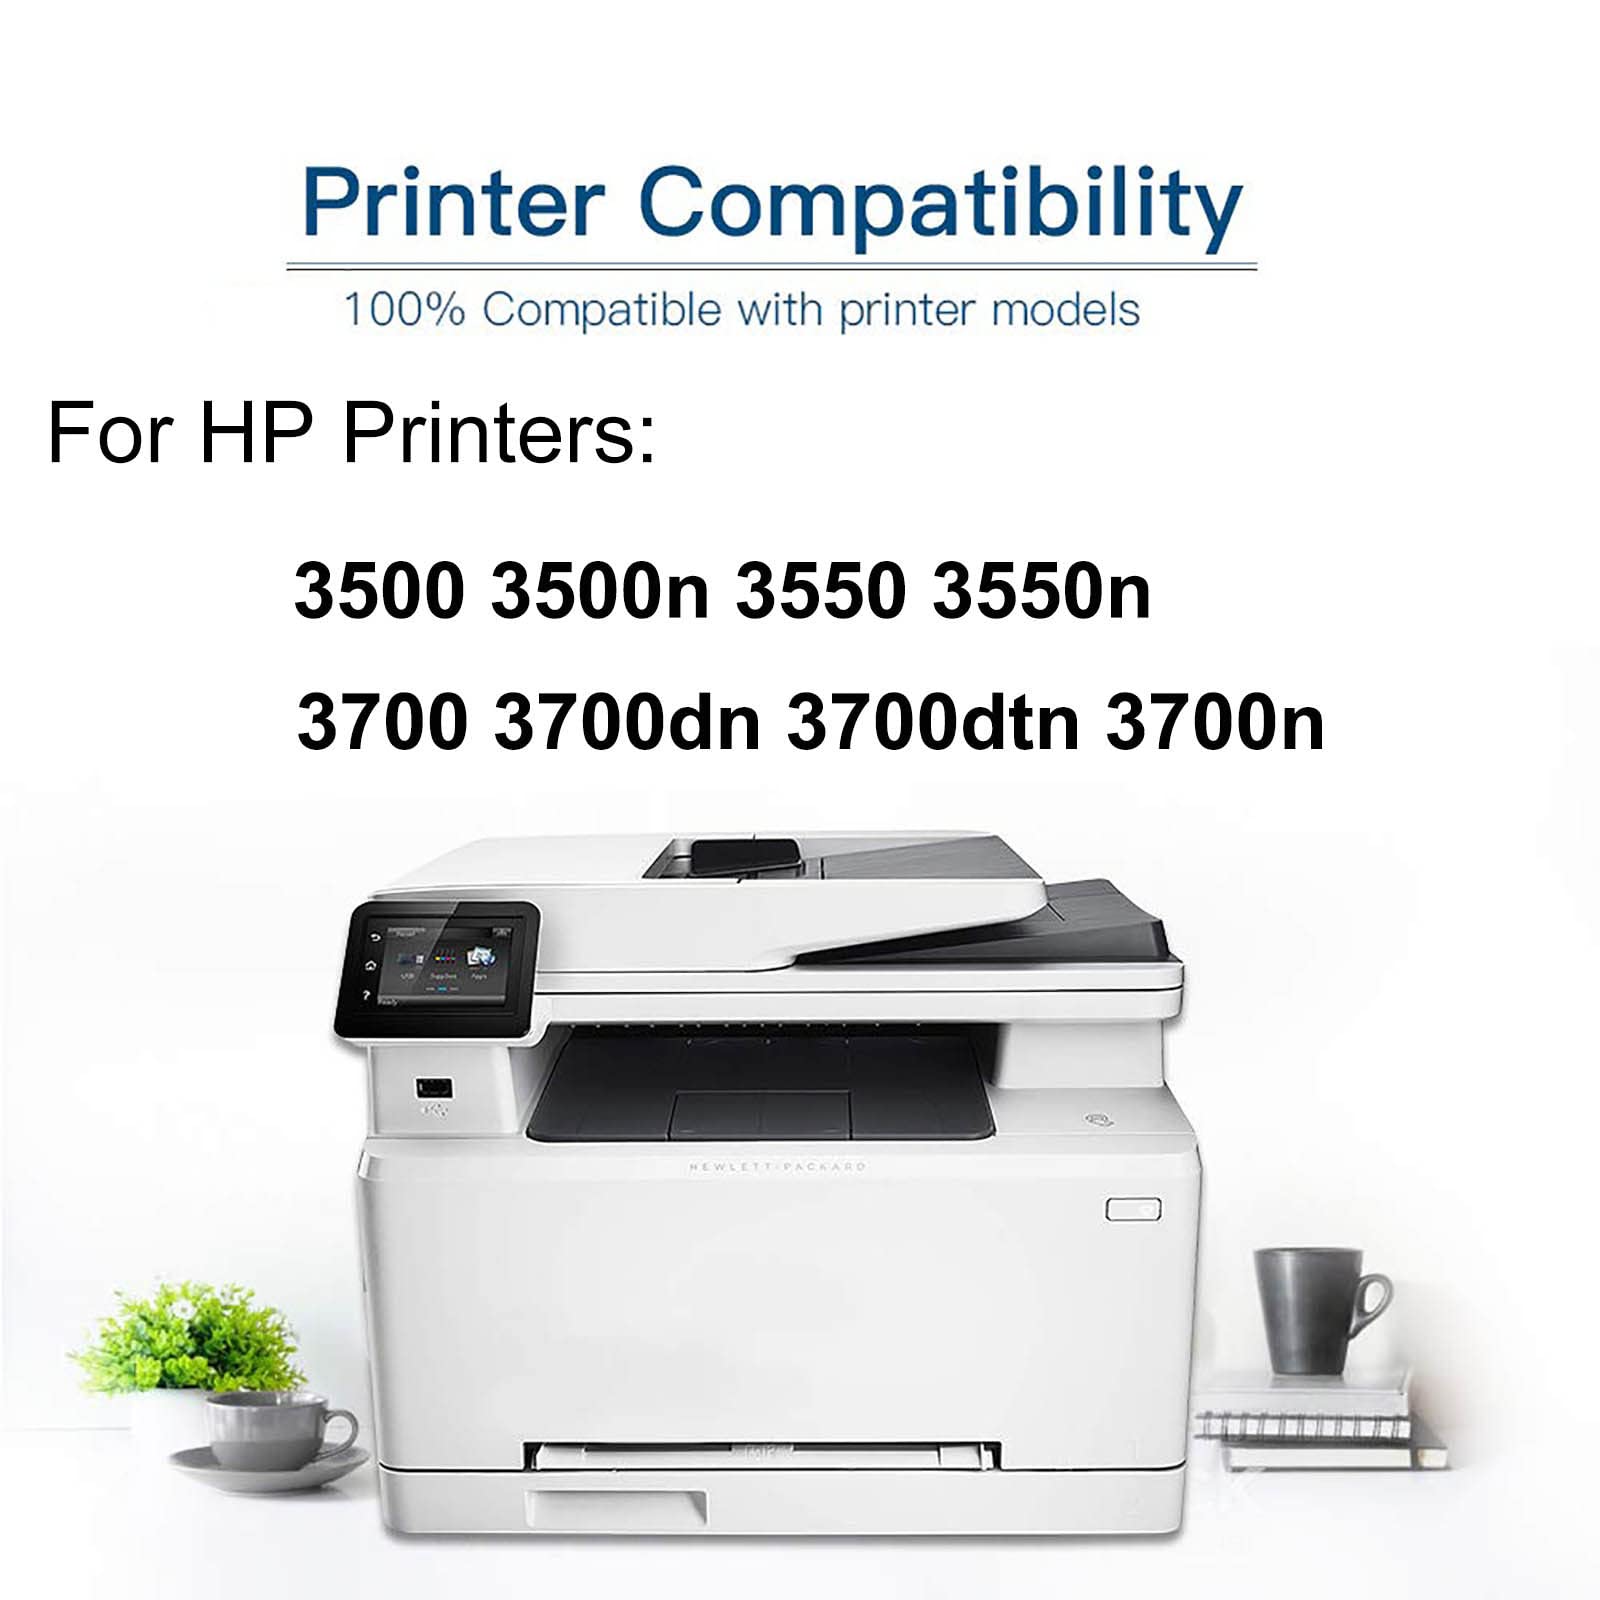 1-Pack Compatible 308A Q2670A Laser Printer Toner Cartridge (Black) Used for HP 3500 3500n 3550 3550n 3700 3700dn 3700dtn 3700n Printer (High Yield)